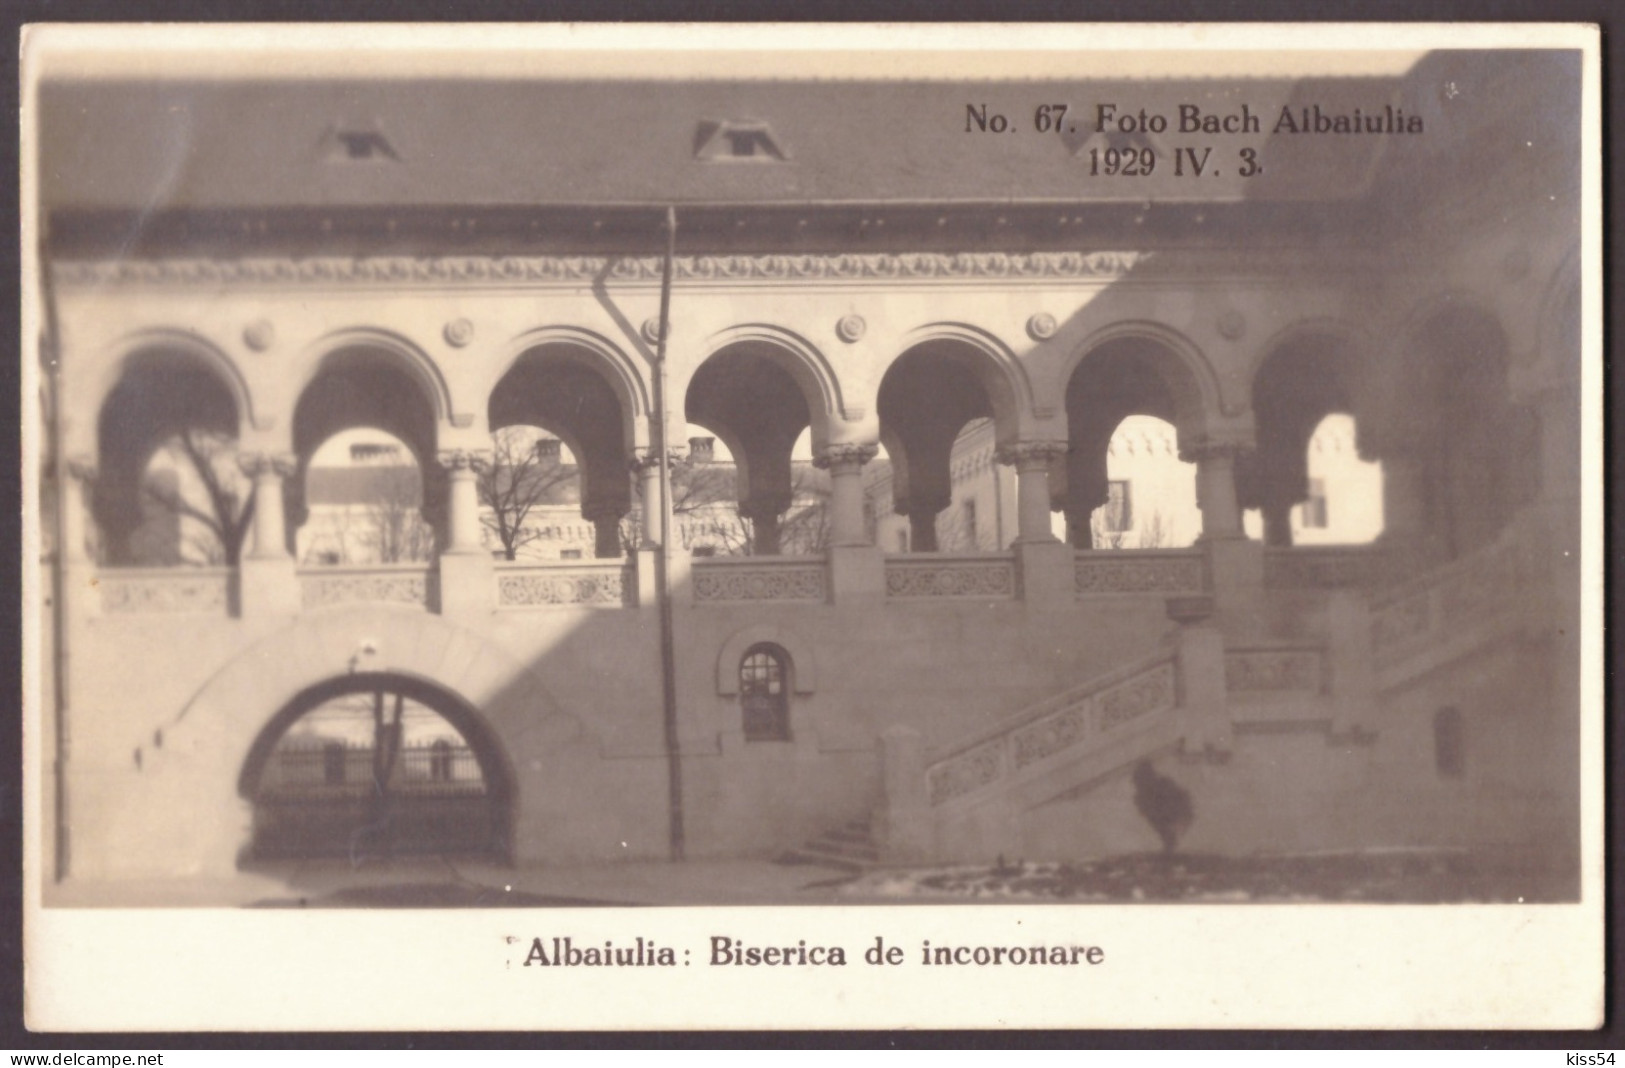 RO 38 - 24899 ALBA-IULIA, Biserica Incoronarii, Romania - Old Postcard, Real Photo - Used - 1929 - Romania